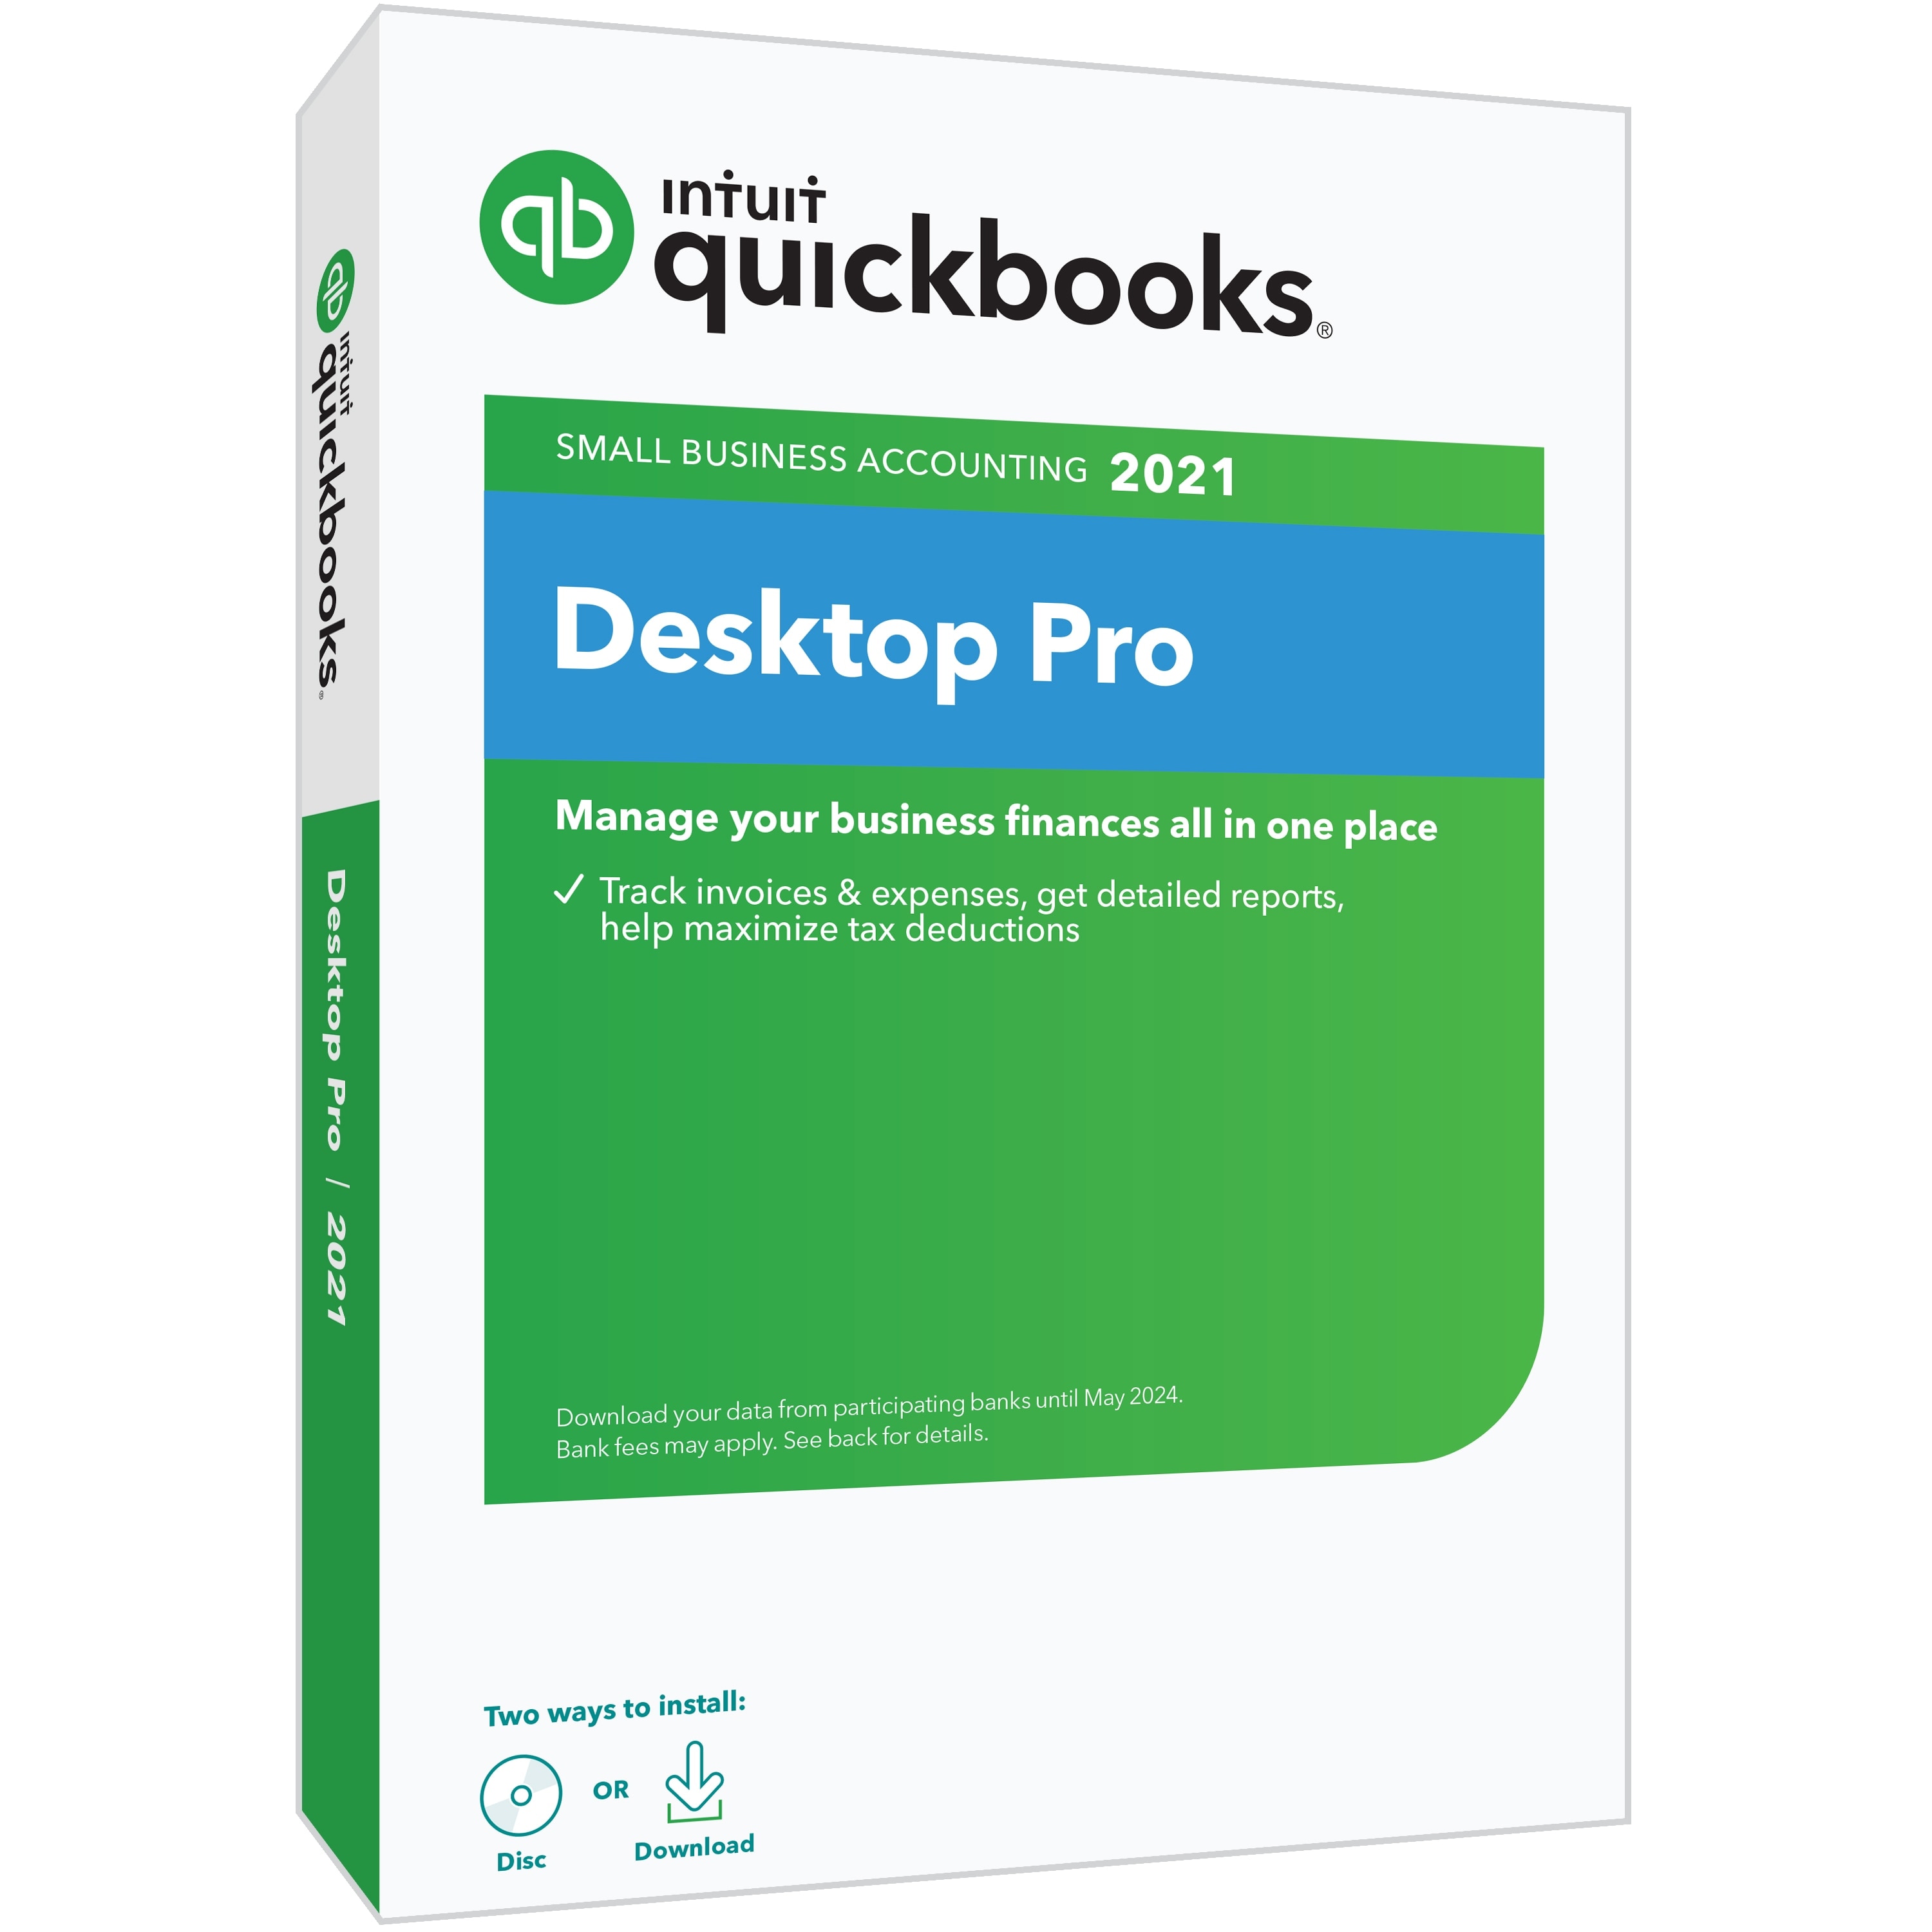 quickbooks free download for windows 10